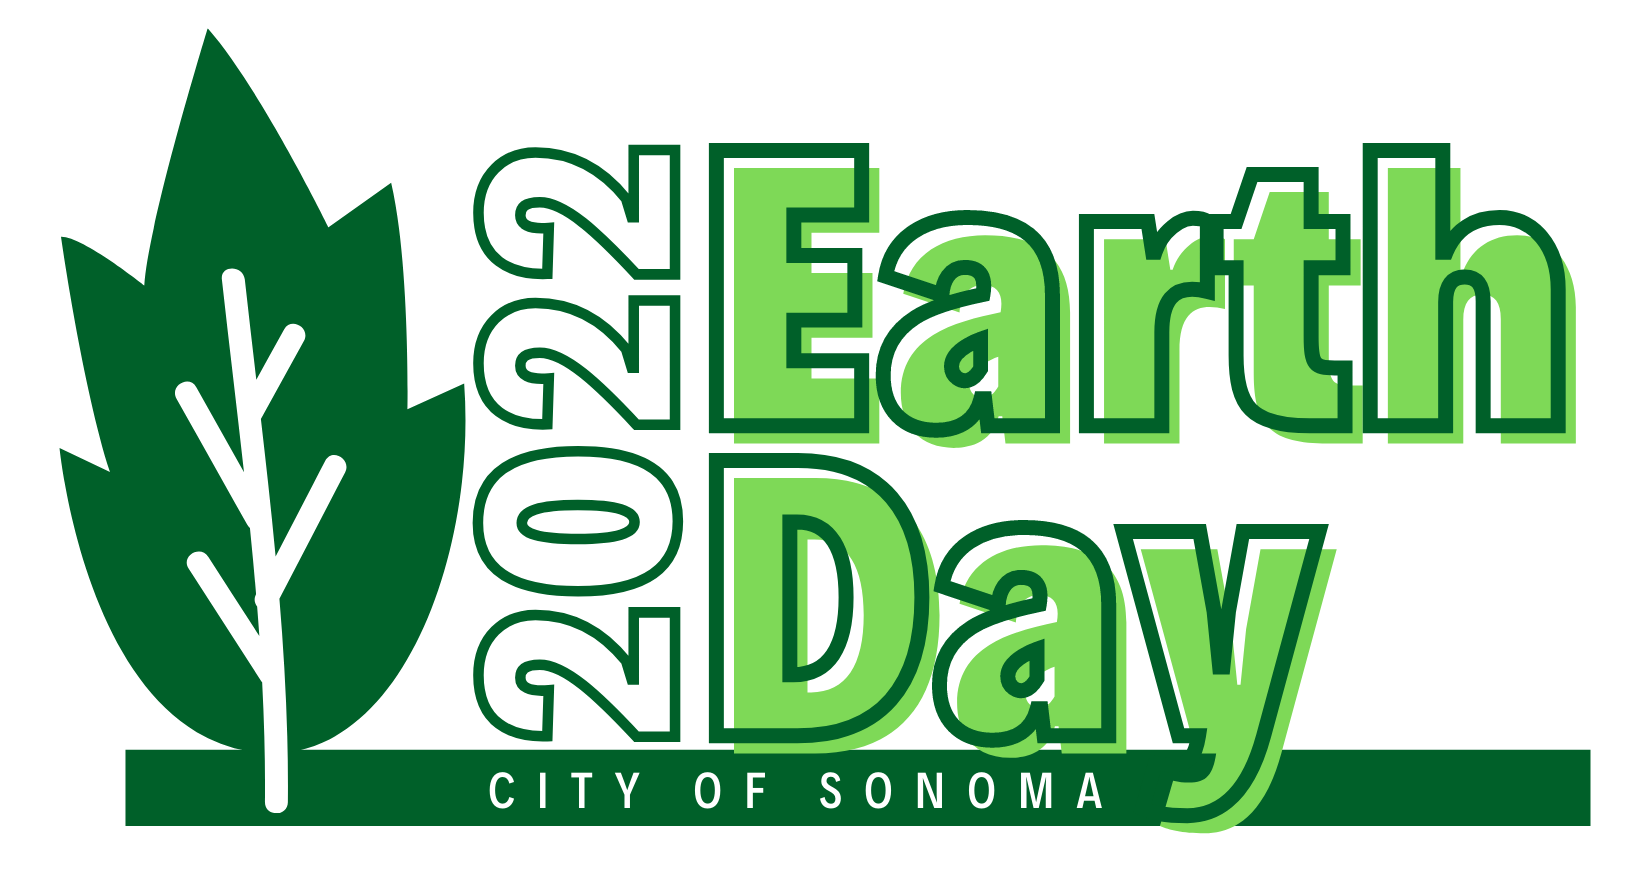 Earth Day 2022 City of Sonoma logo